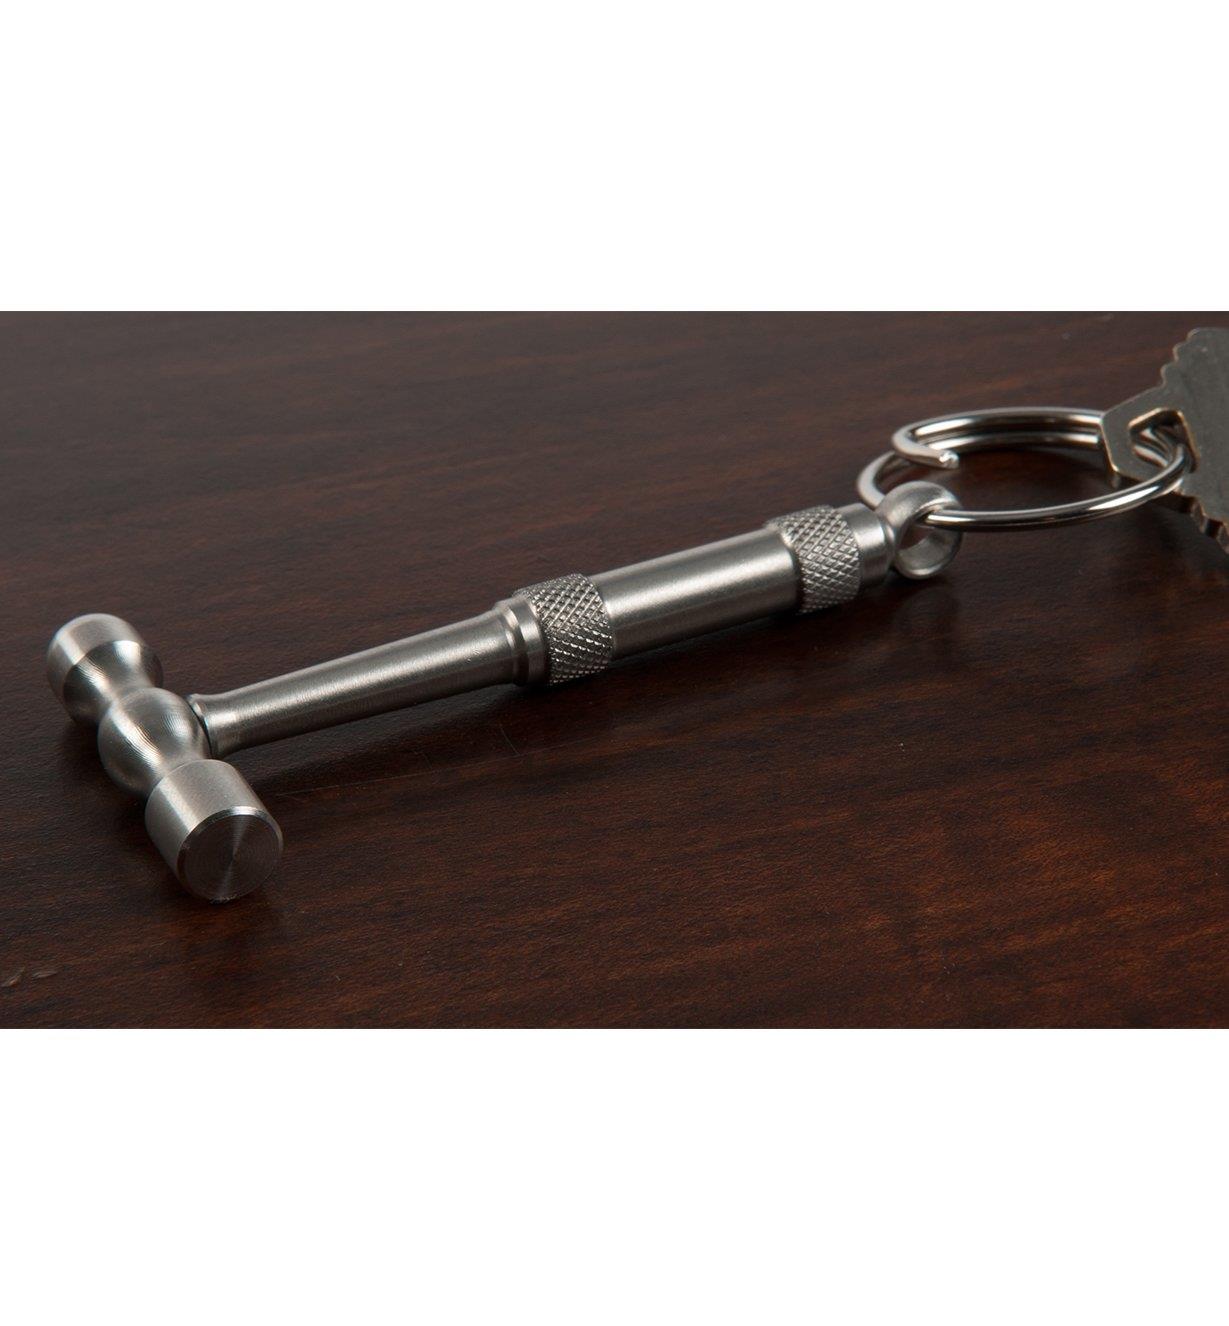 50K2801 - Key-Ring Hammer